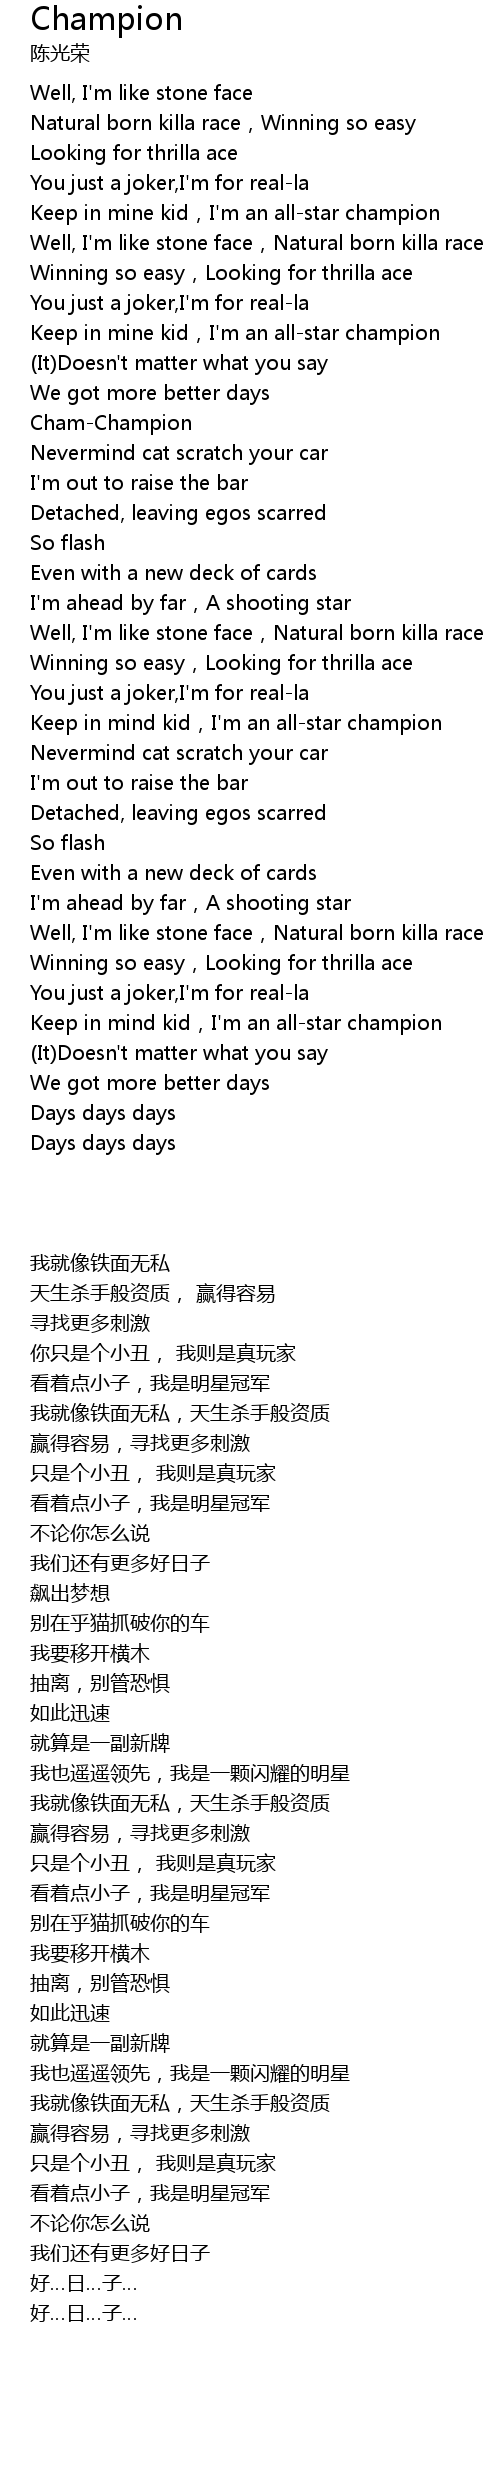 Champion Lyrics Lyrics